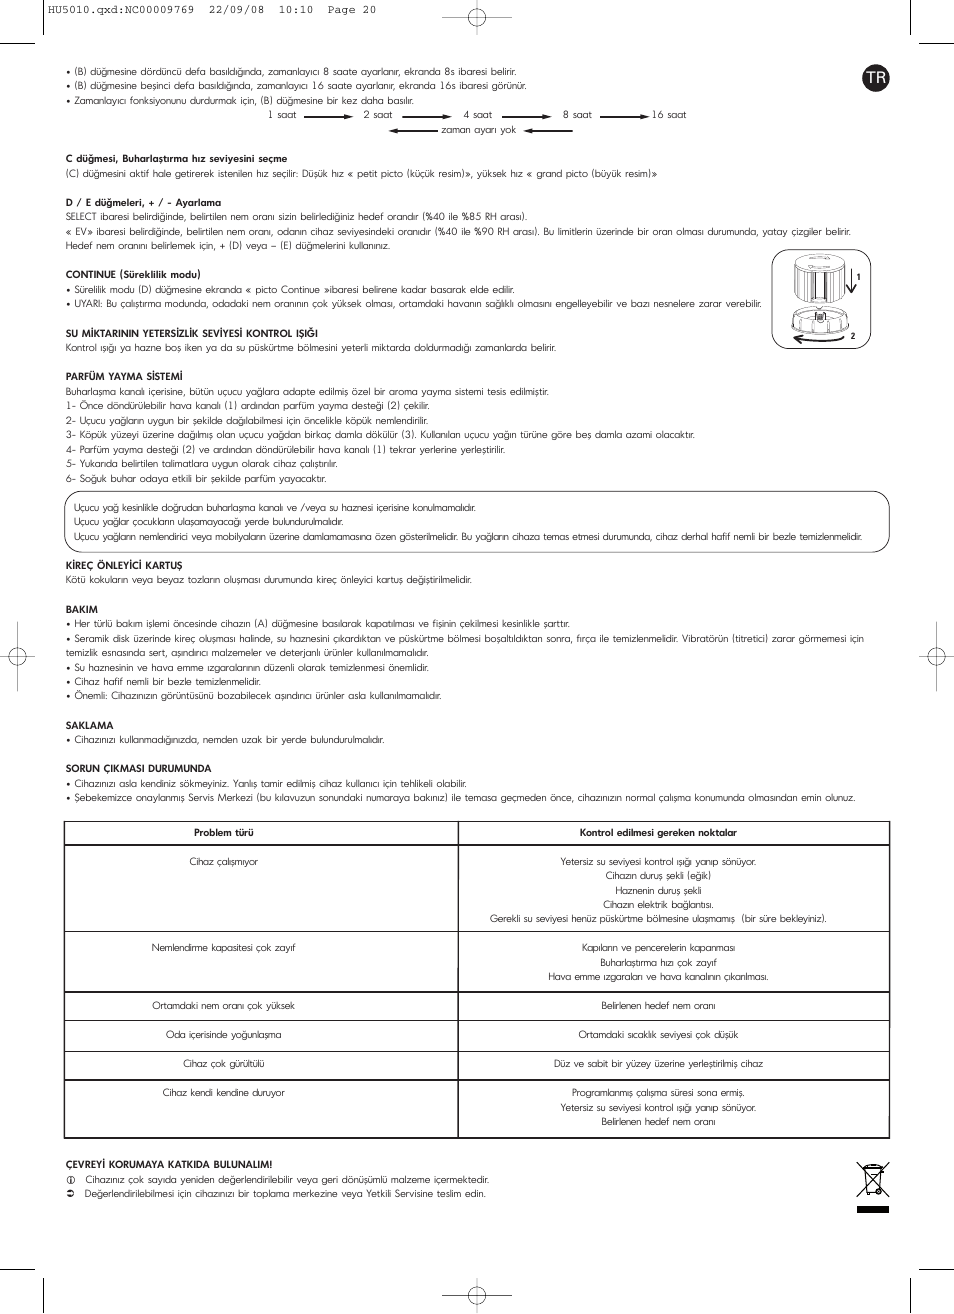 ROWENTA VITALITY HU5010 User Manual | Page 20 / 20 | Original mode